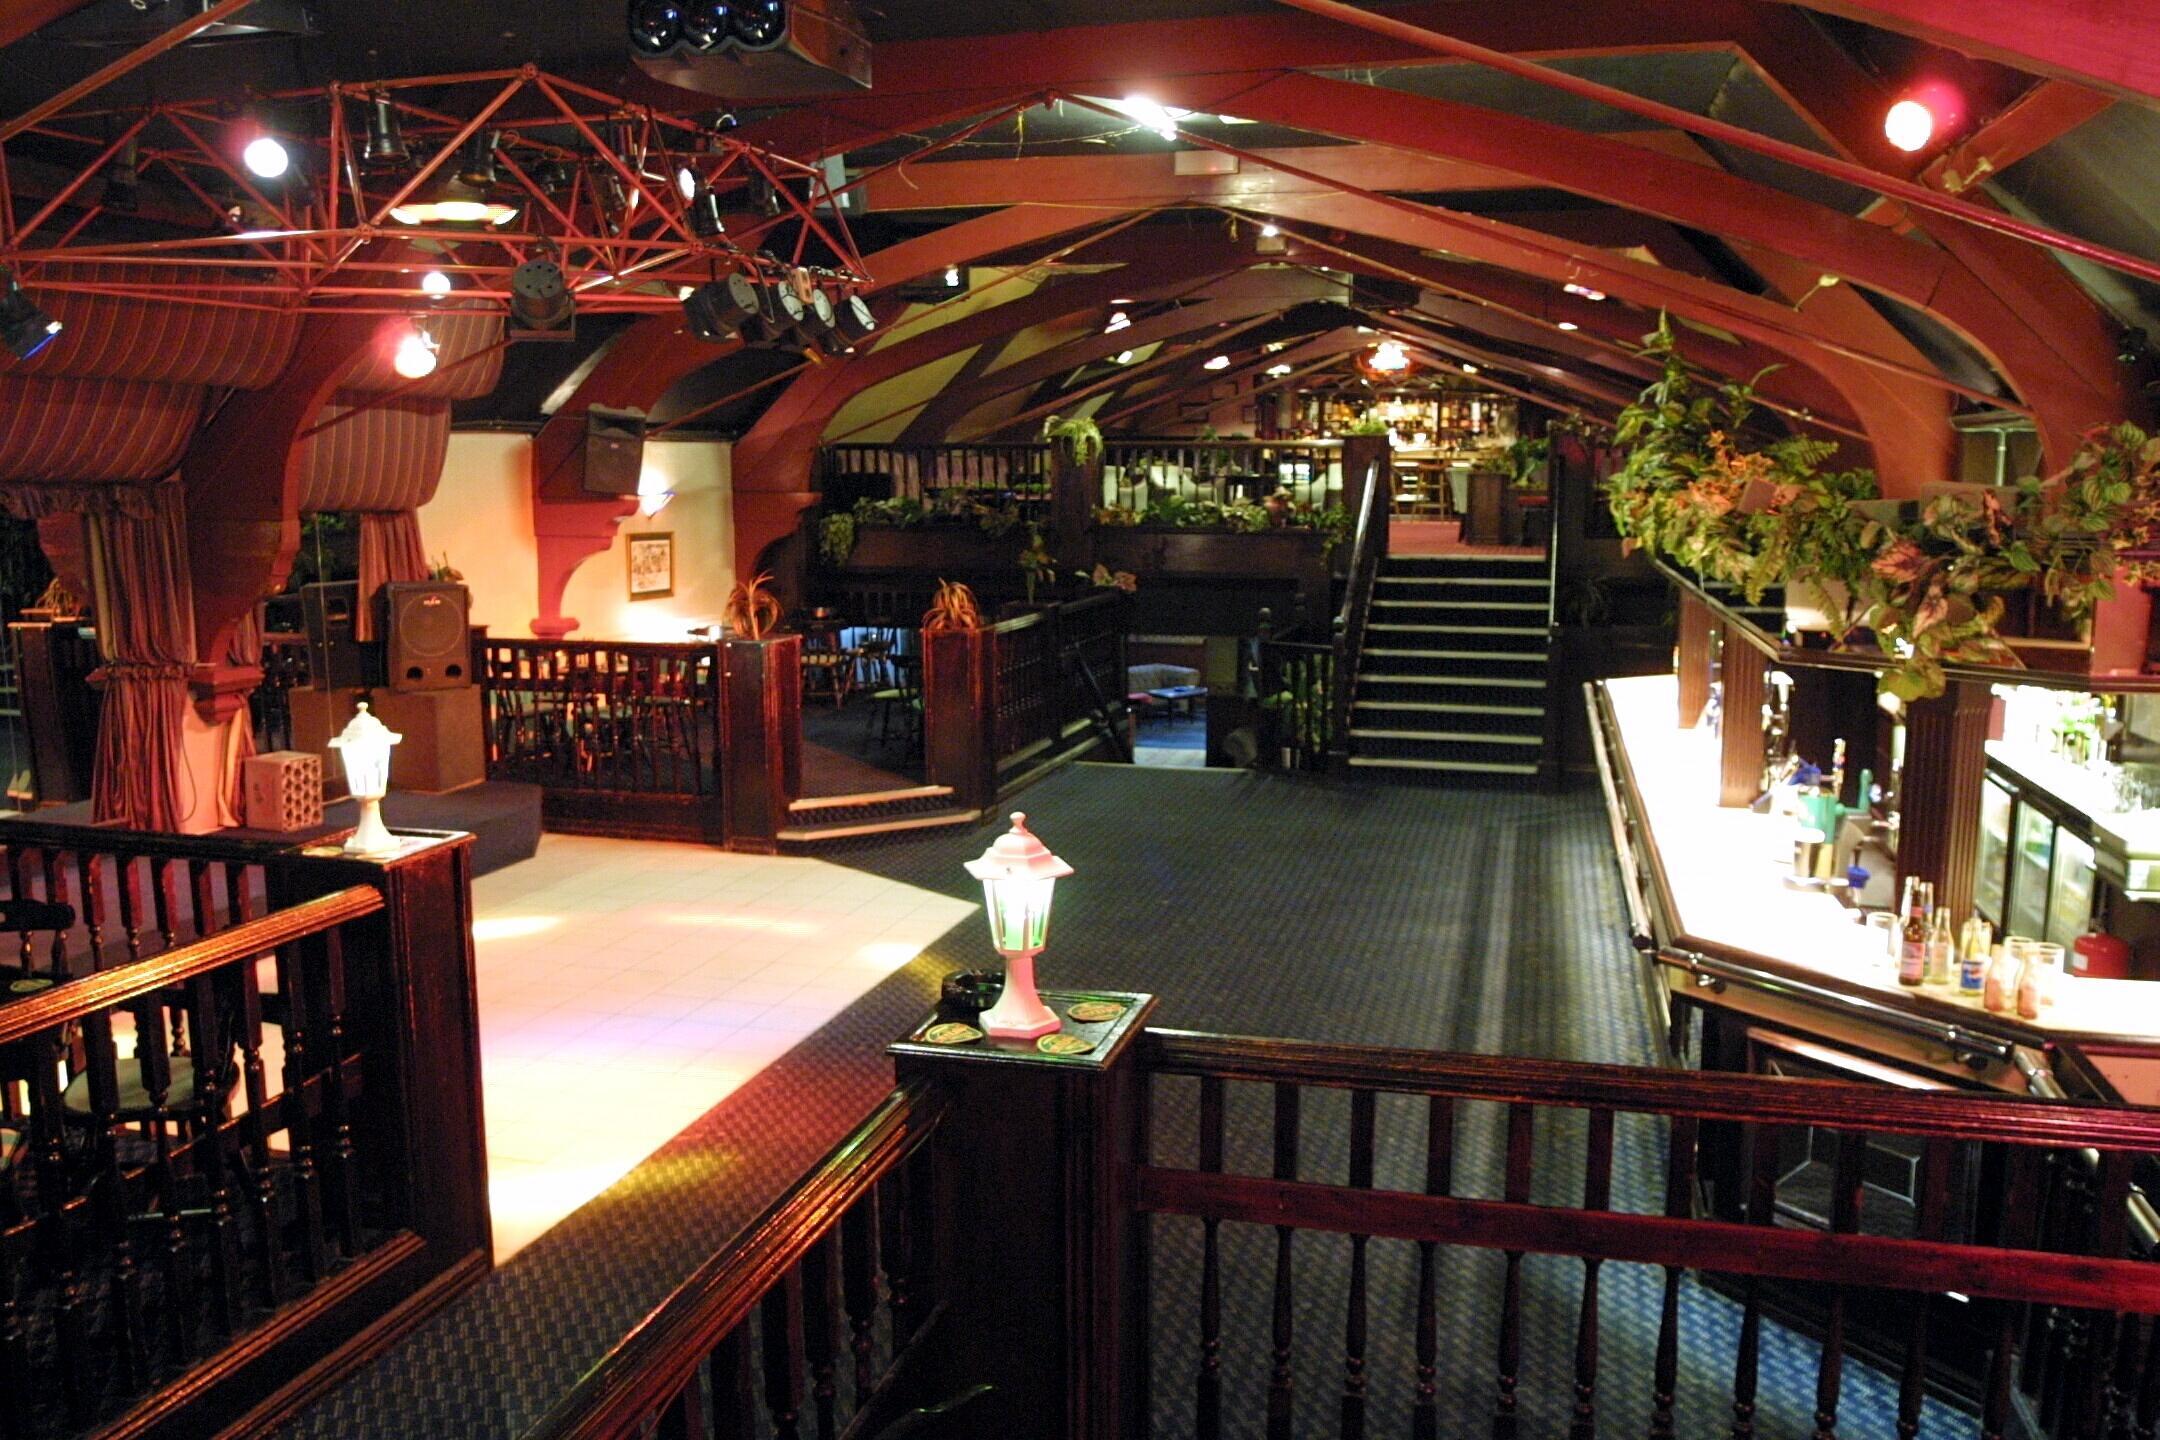 Inside Scotts nightclub, Wrexham.